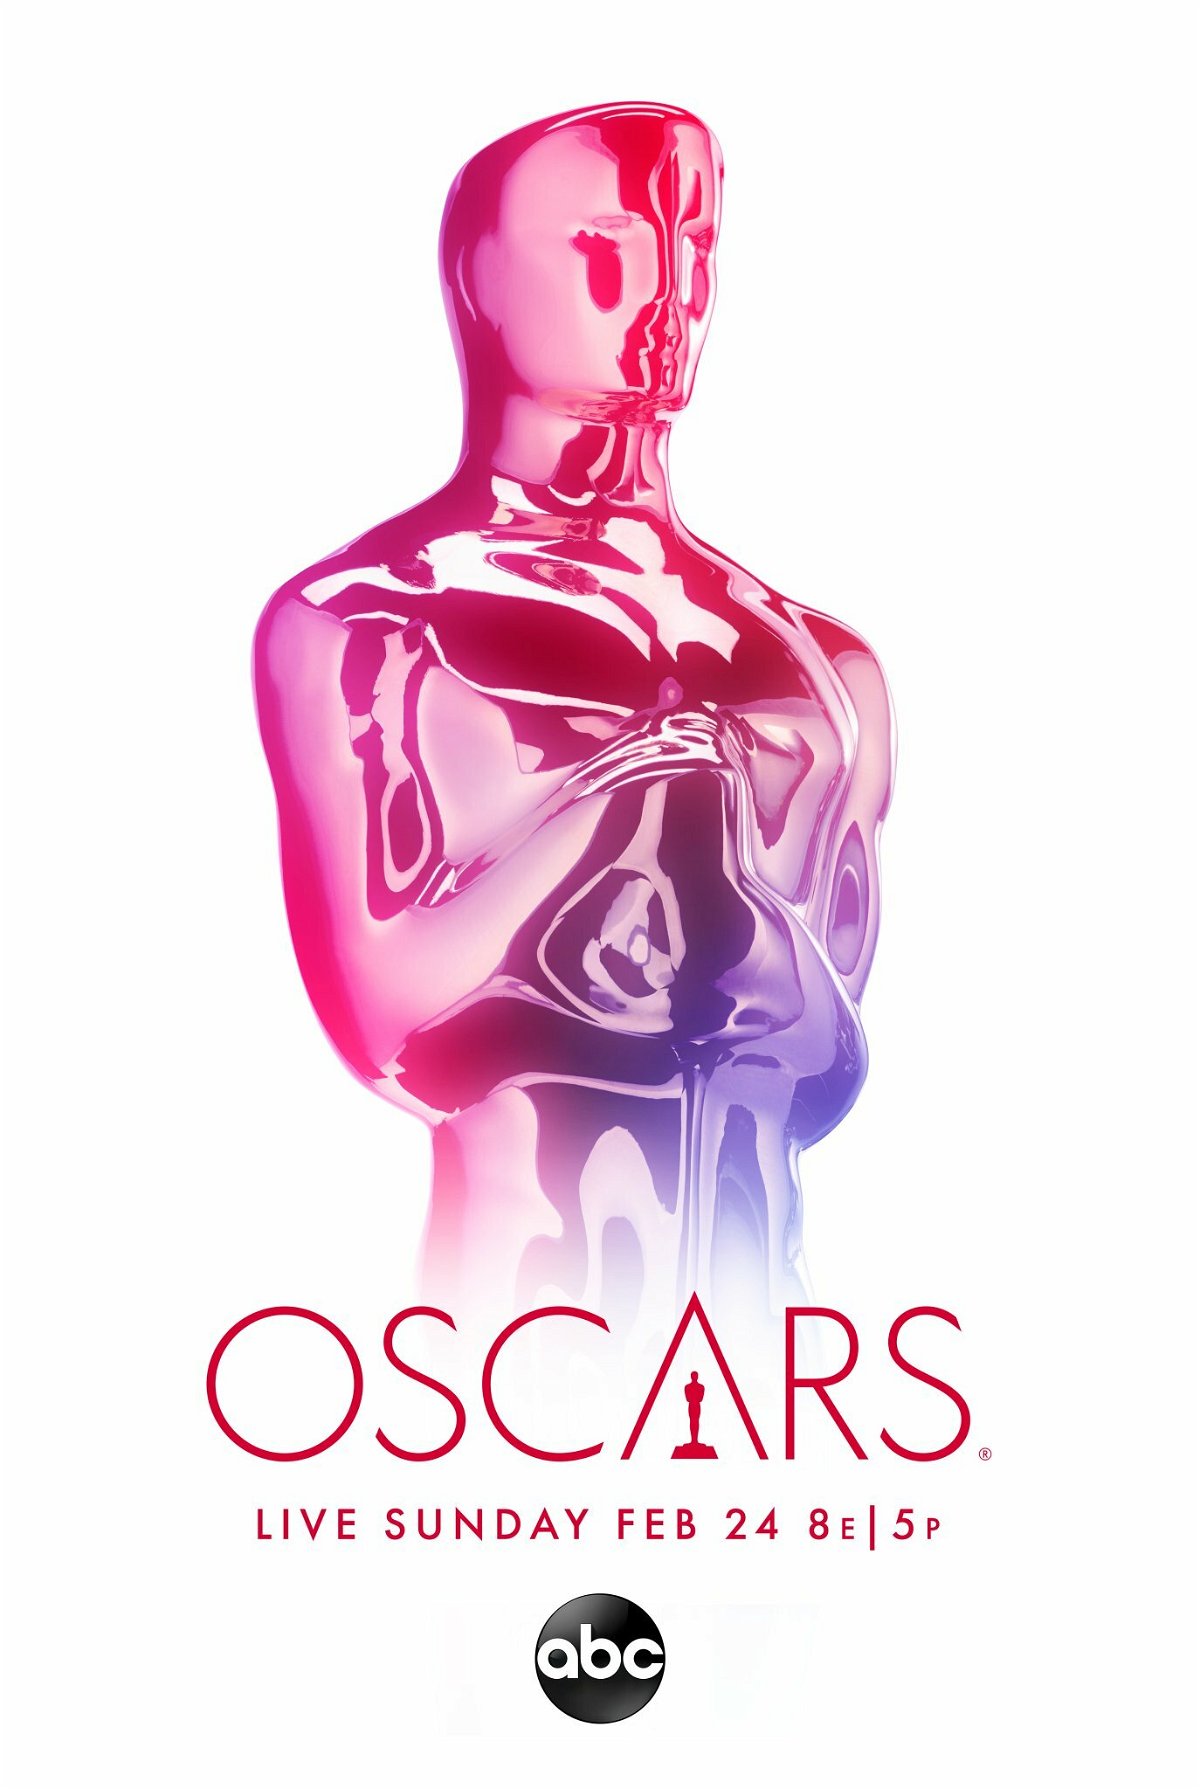 Il poster degli Academy Awards 2019